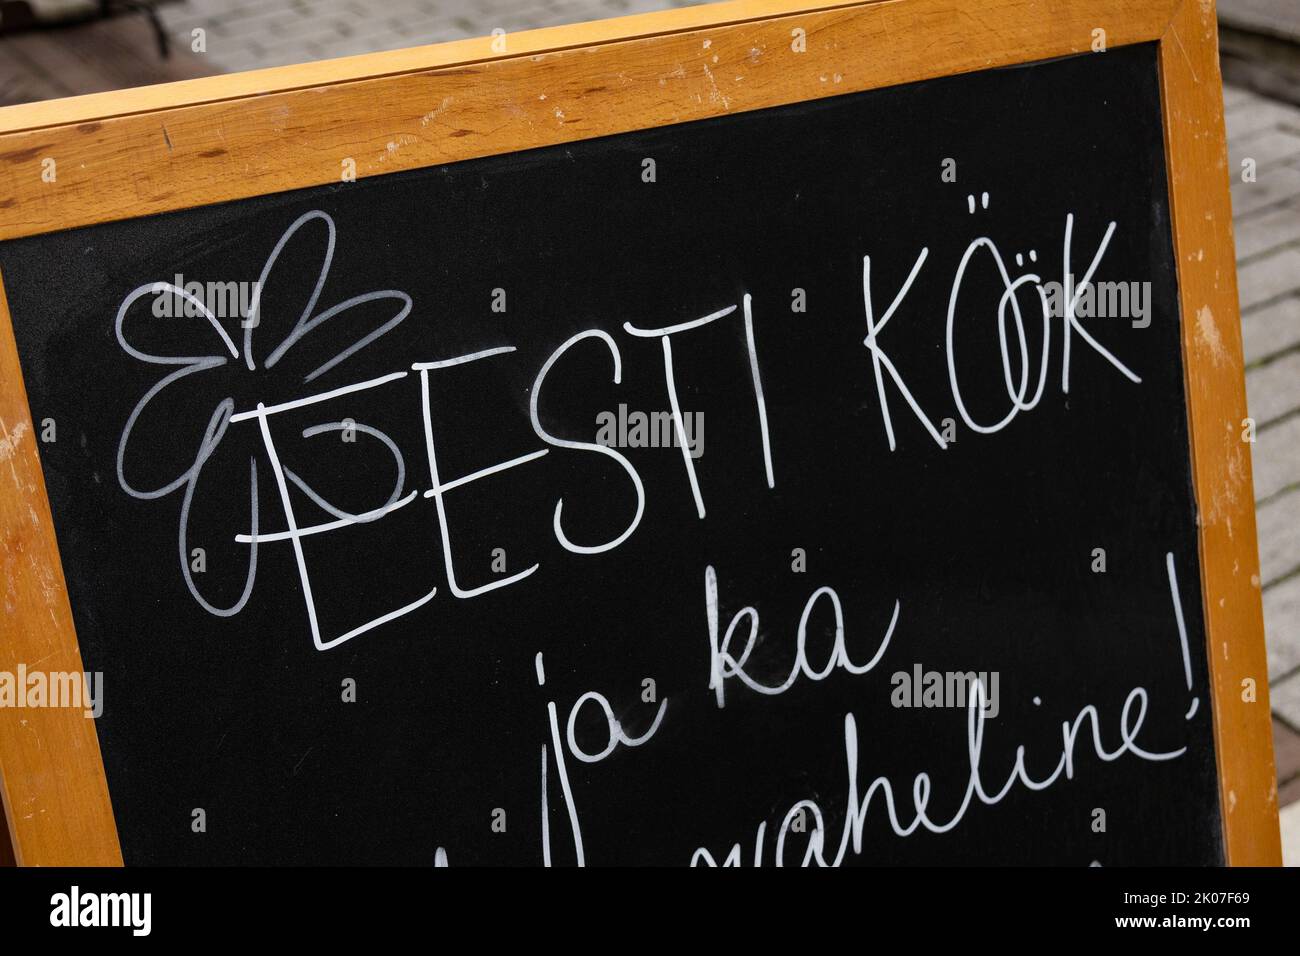 Board, Sign, Eesti Köök, Estonian Cuisine, Tartu, Estonia, Baltics, Europe Stock Photo